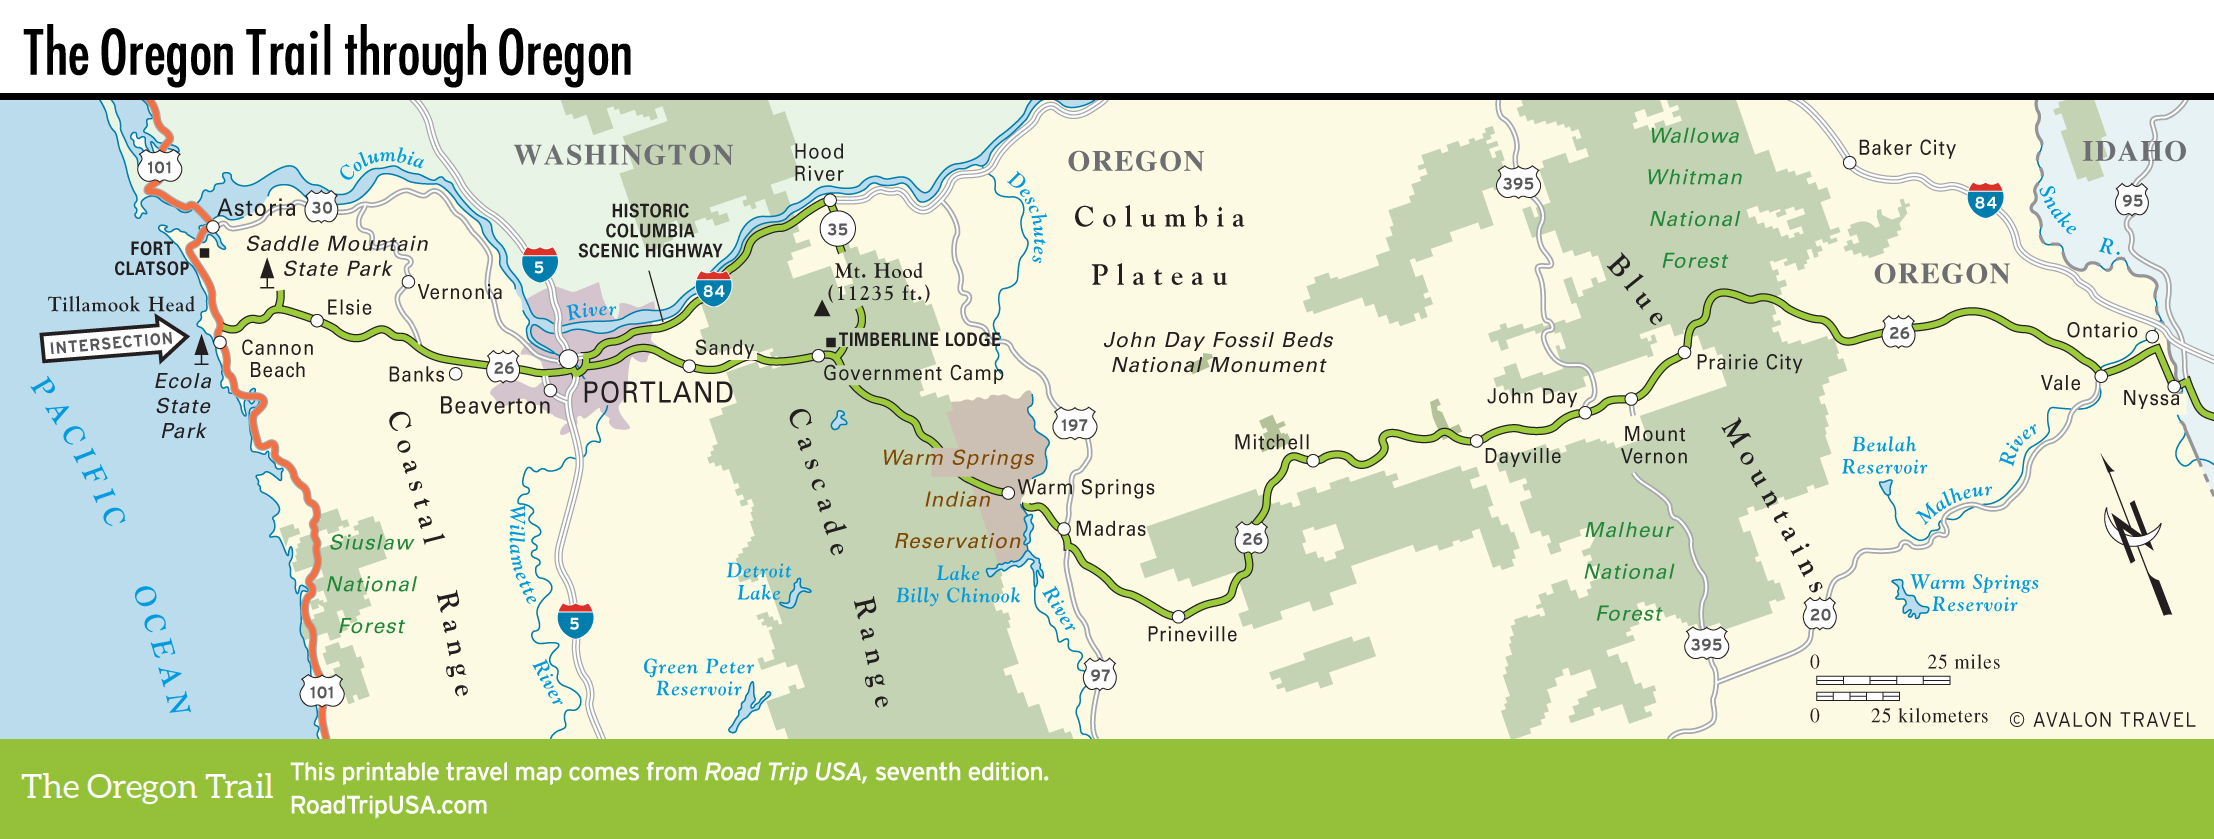 oregon trail 2 map